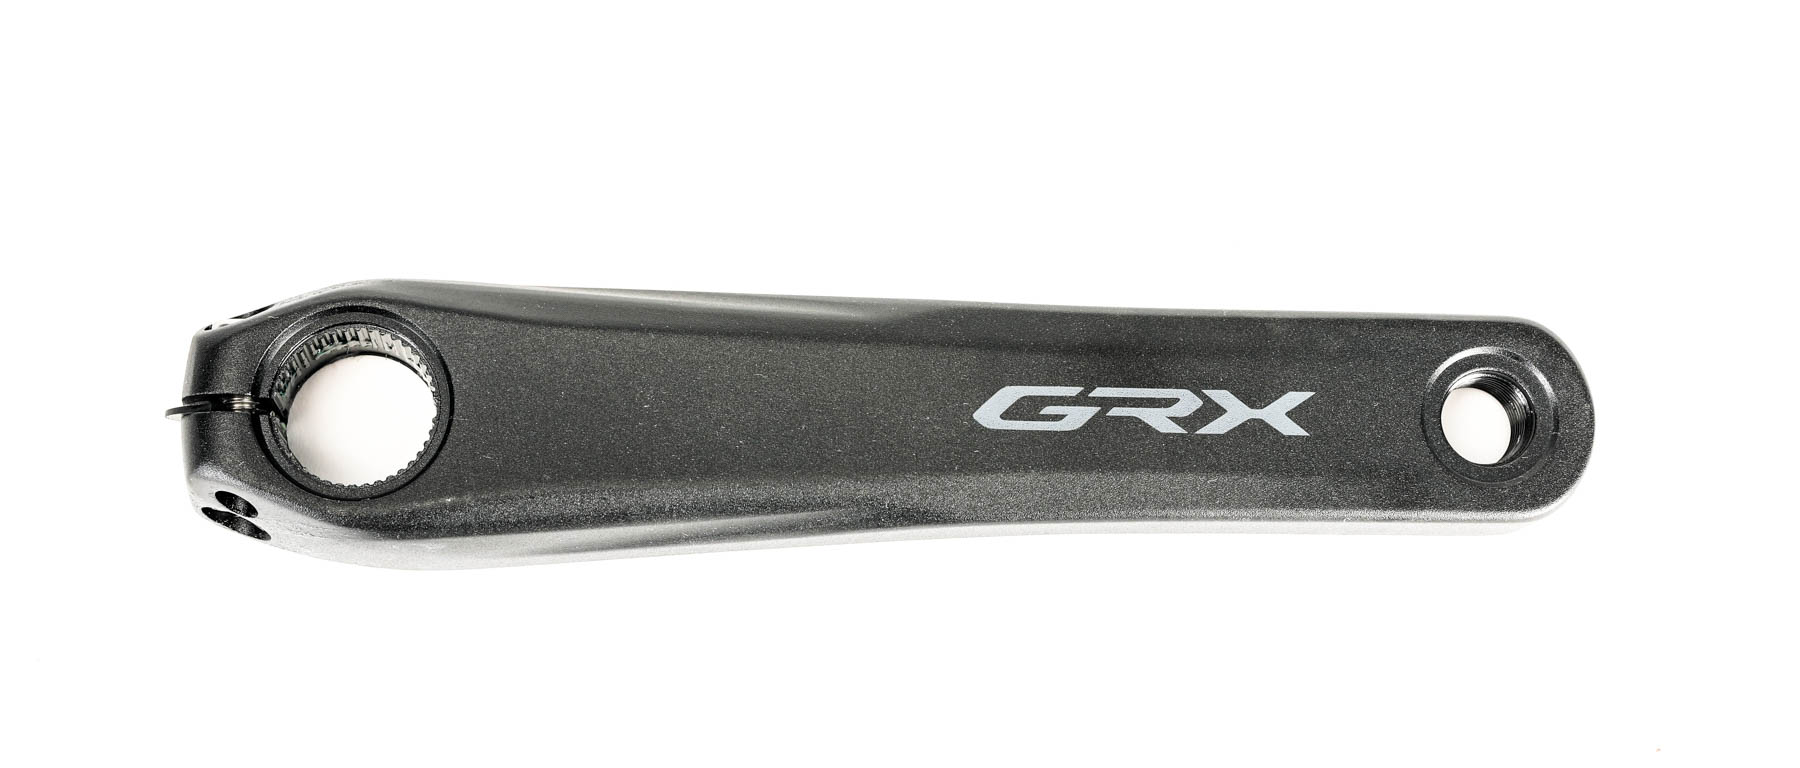 Shimano GRX FC-RX610 2x Crankset